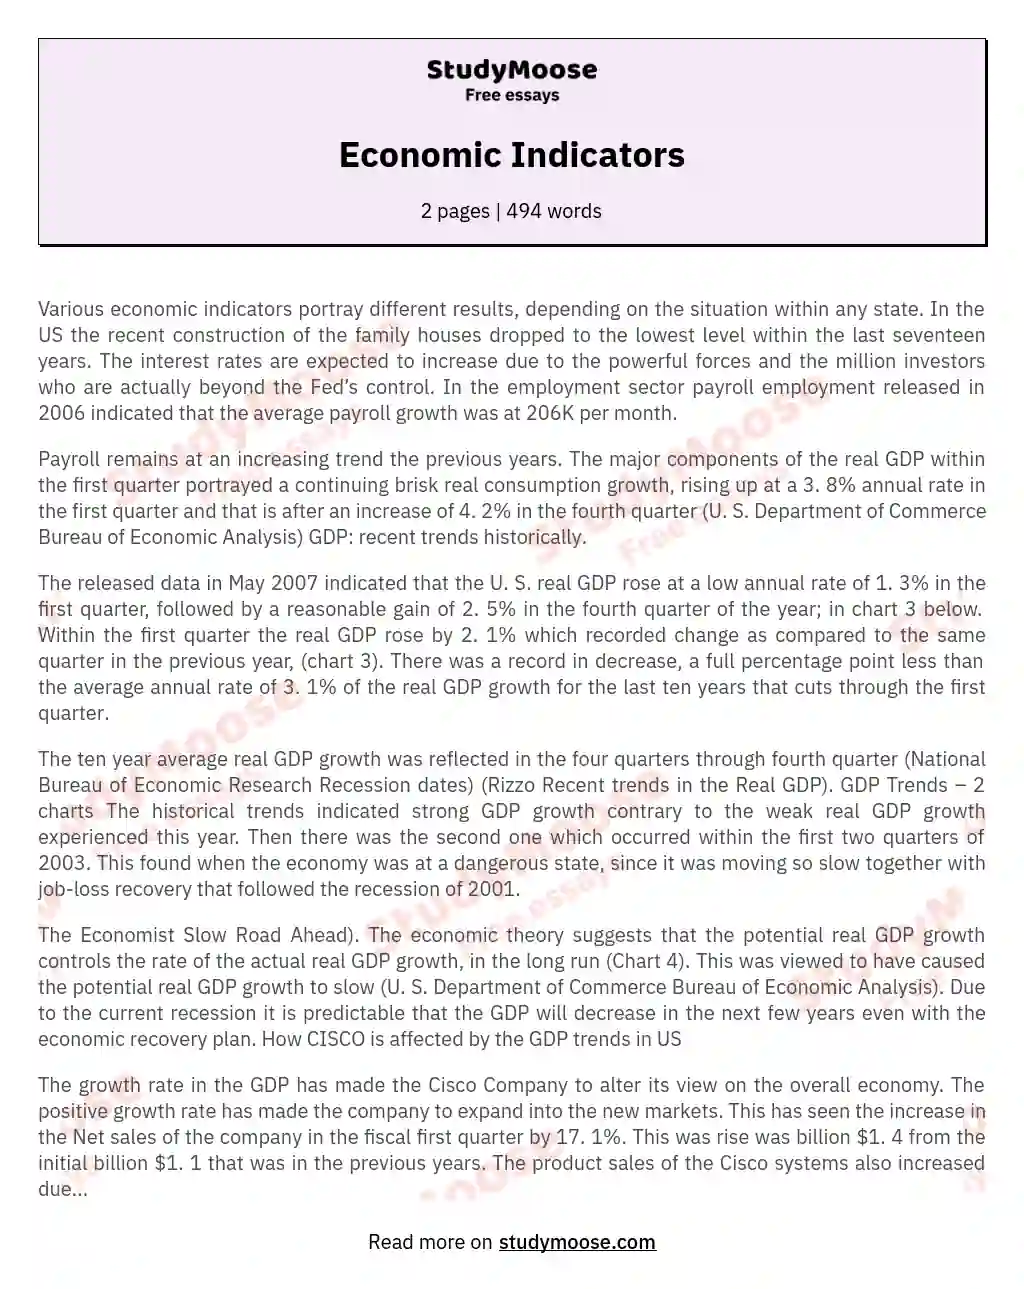 economic indicators essay grade 12